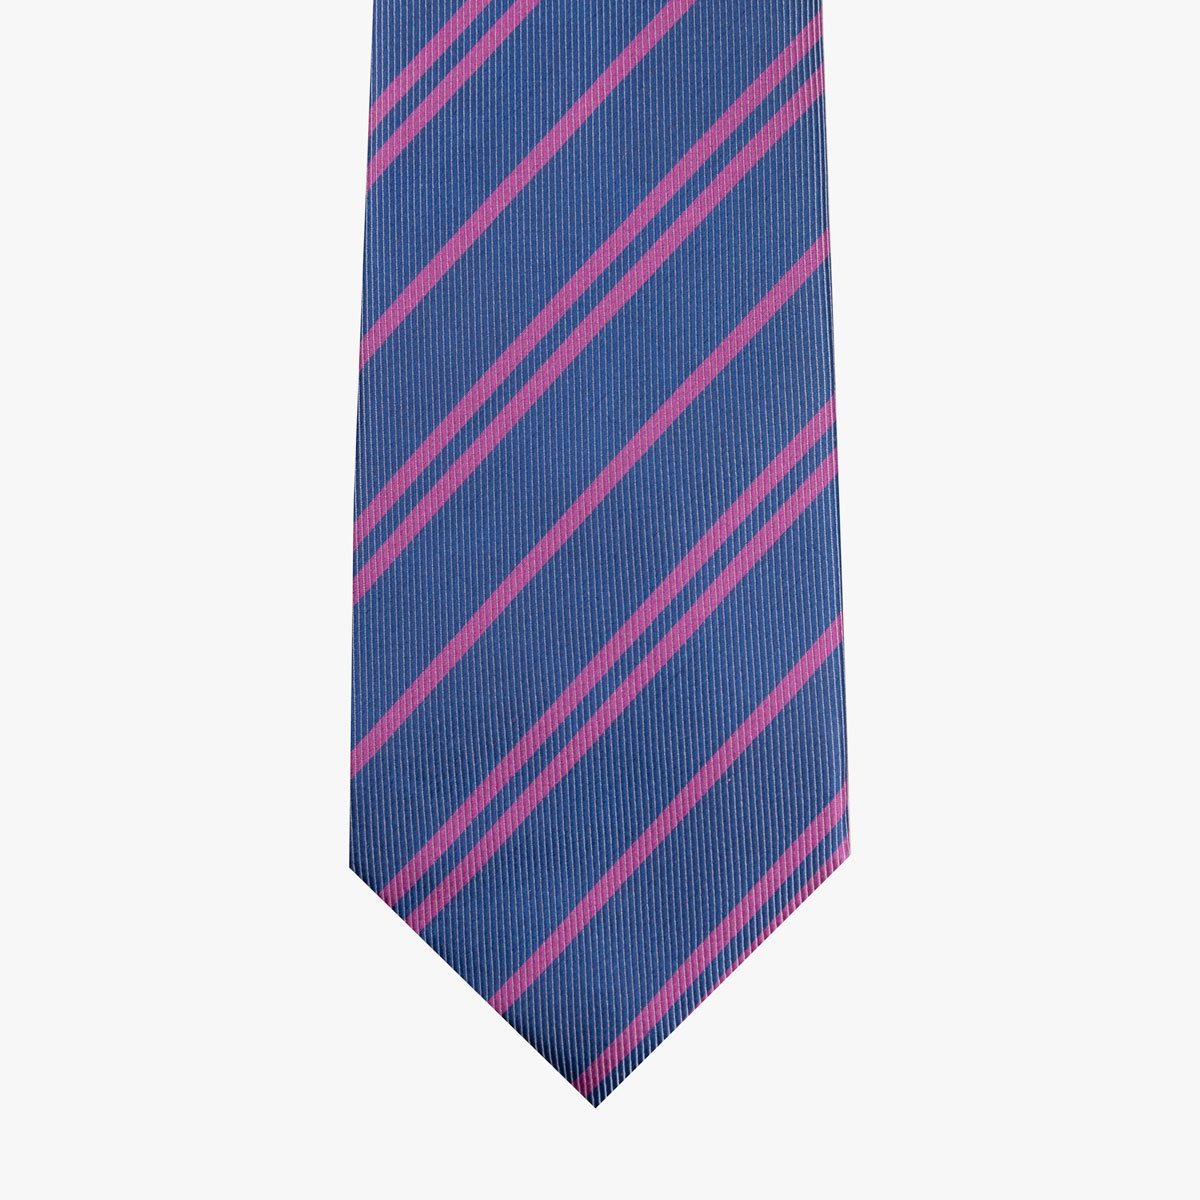 Krawatte aus Seide in dunkelblau gestreift